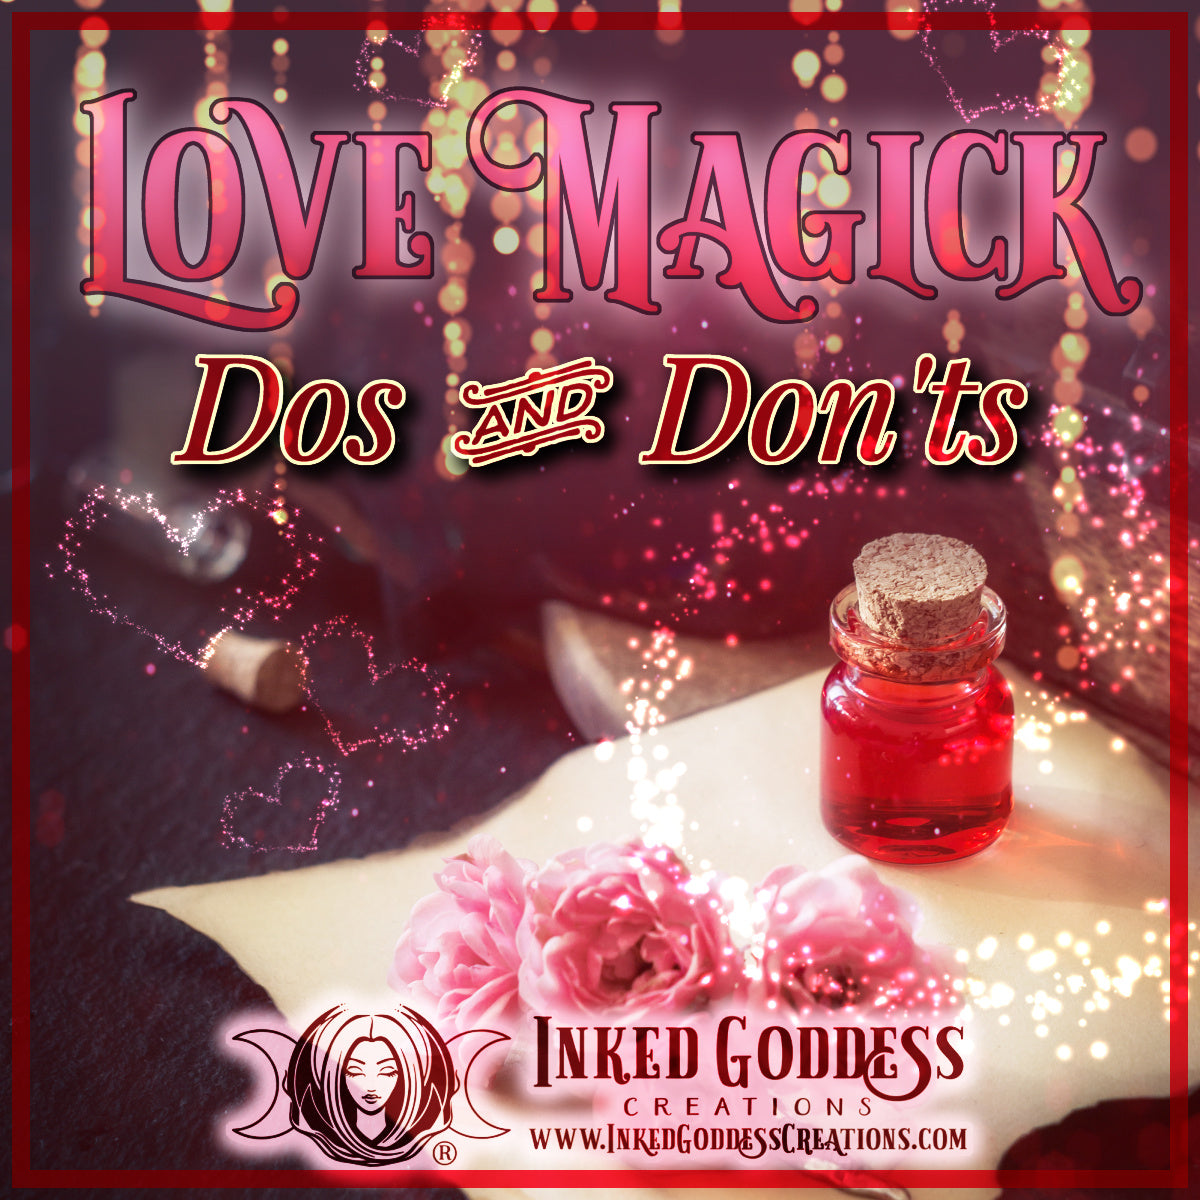 Love Magick Dos and Don’ts